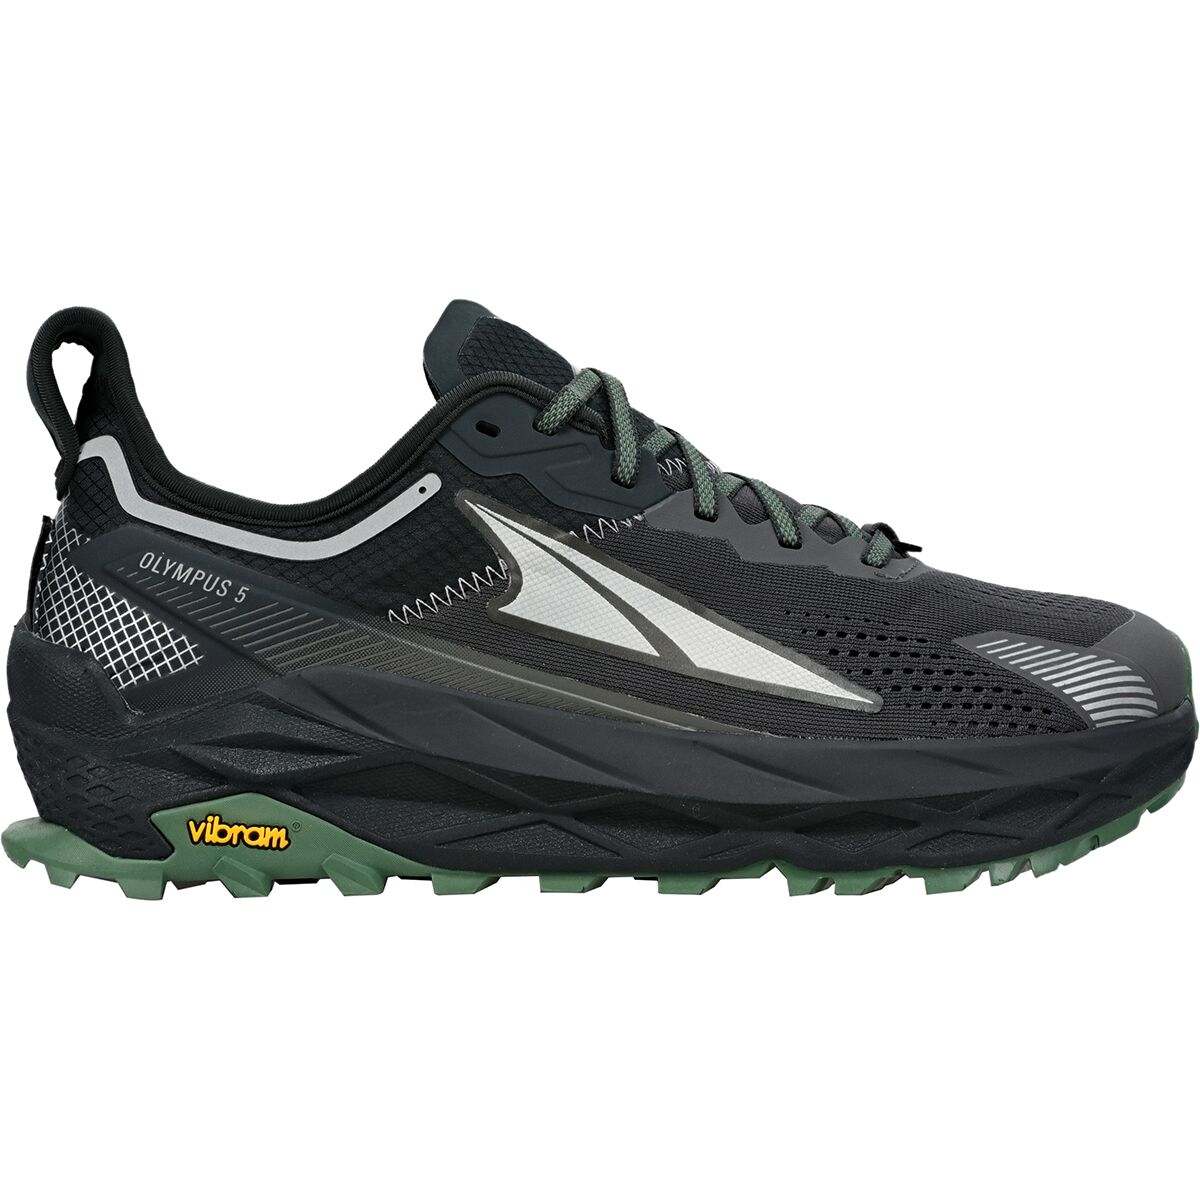 Altra Olympus 5.0 Trail Running Shoe - Men's